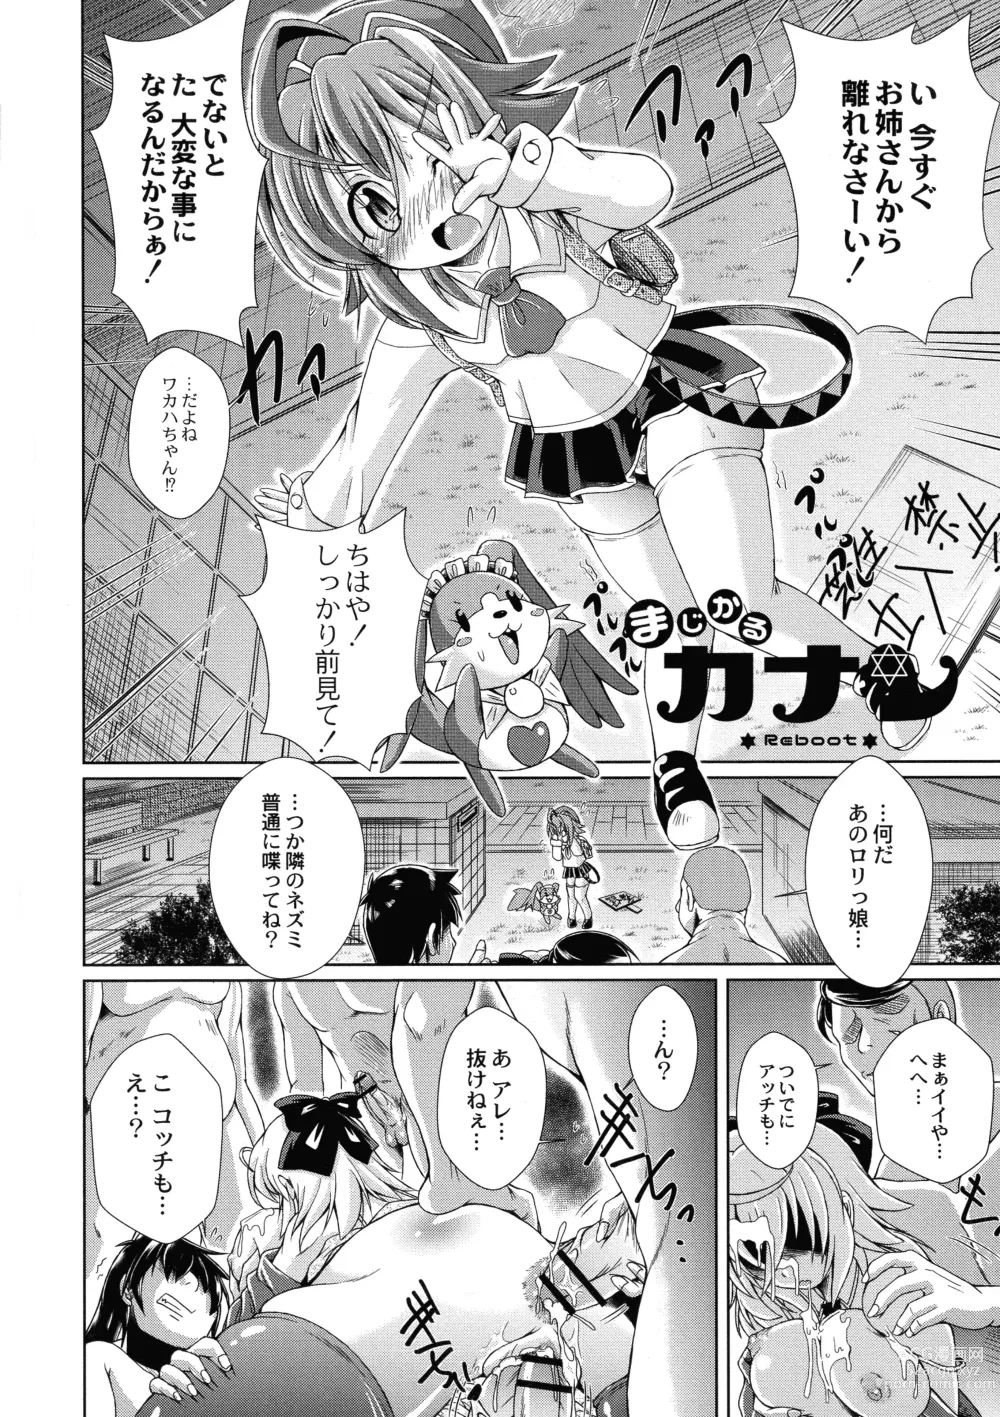 Page 6 of manga Magical Canaan Reboot